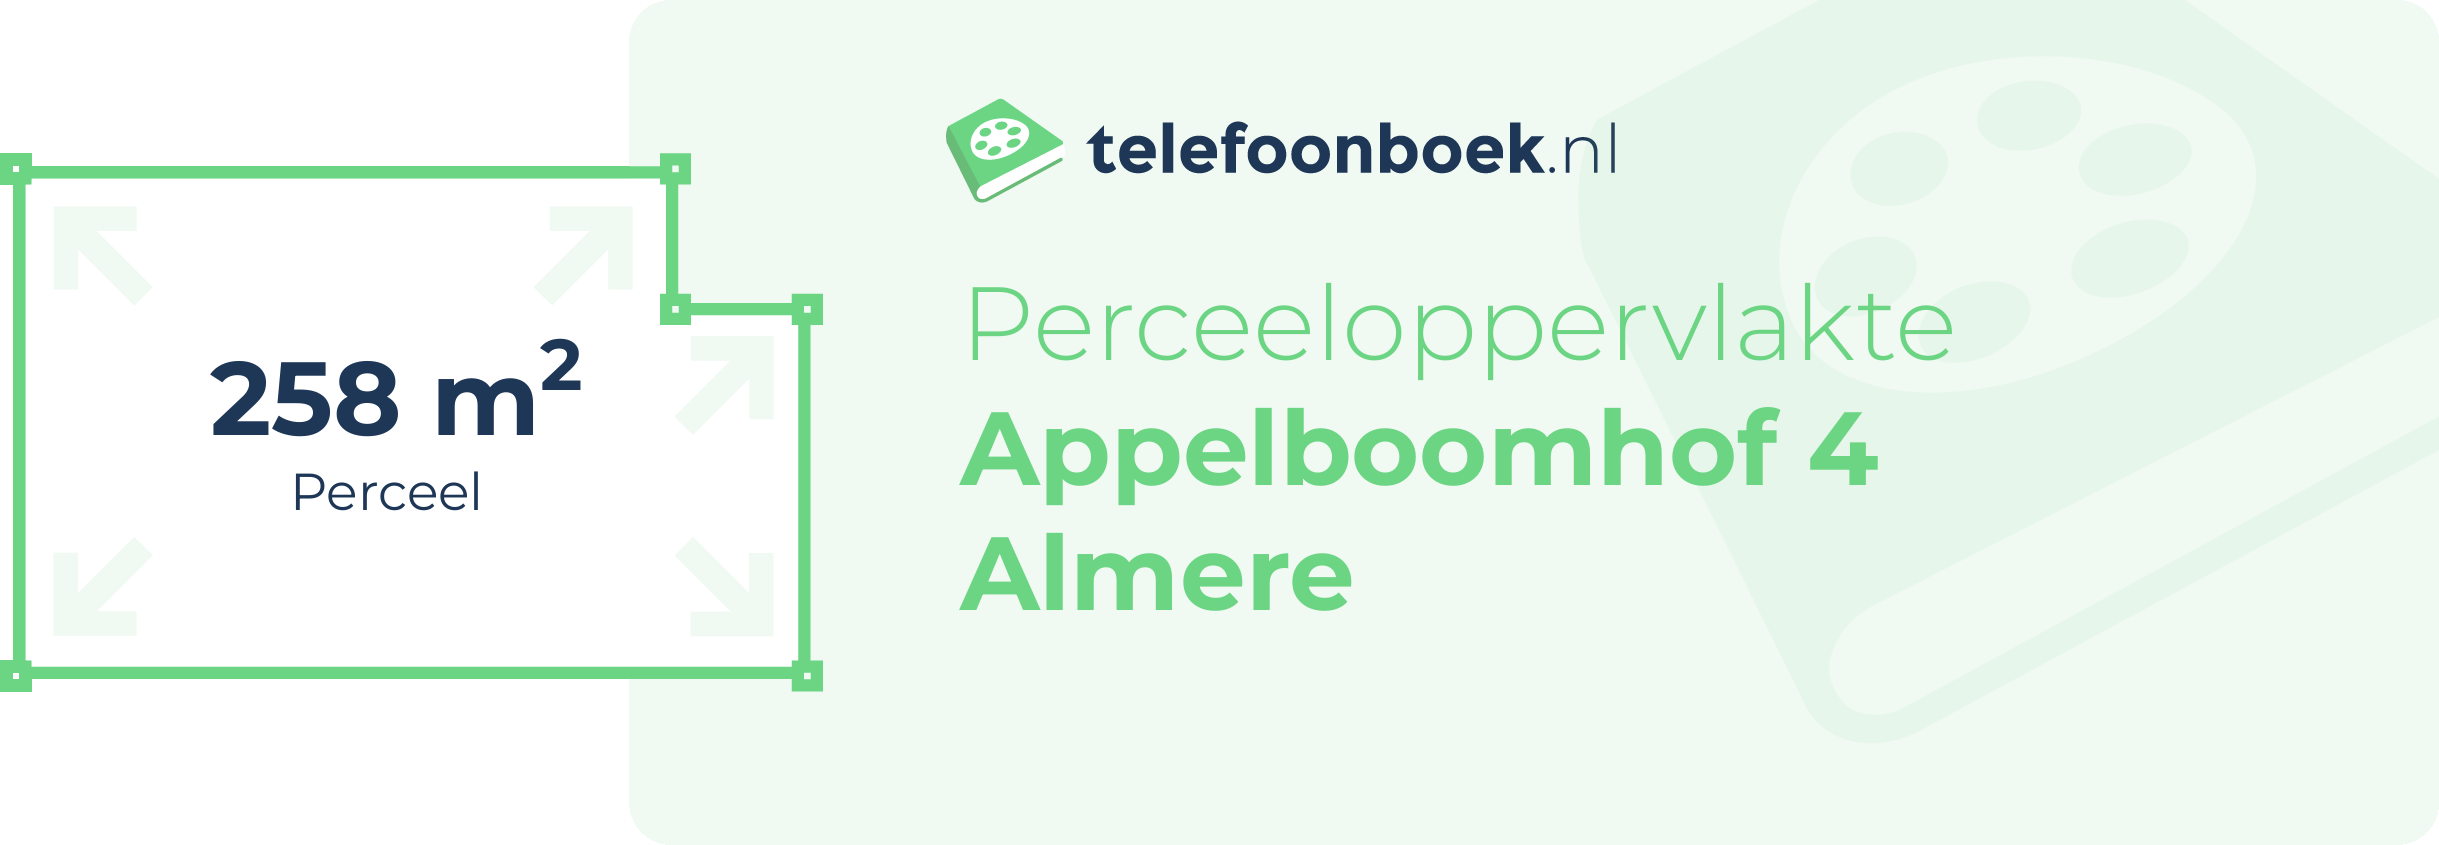 Perceeloppervlakte Appelboomhof 4 Almere